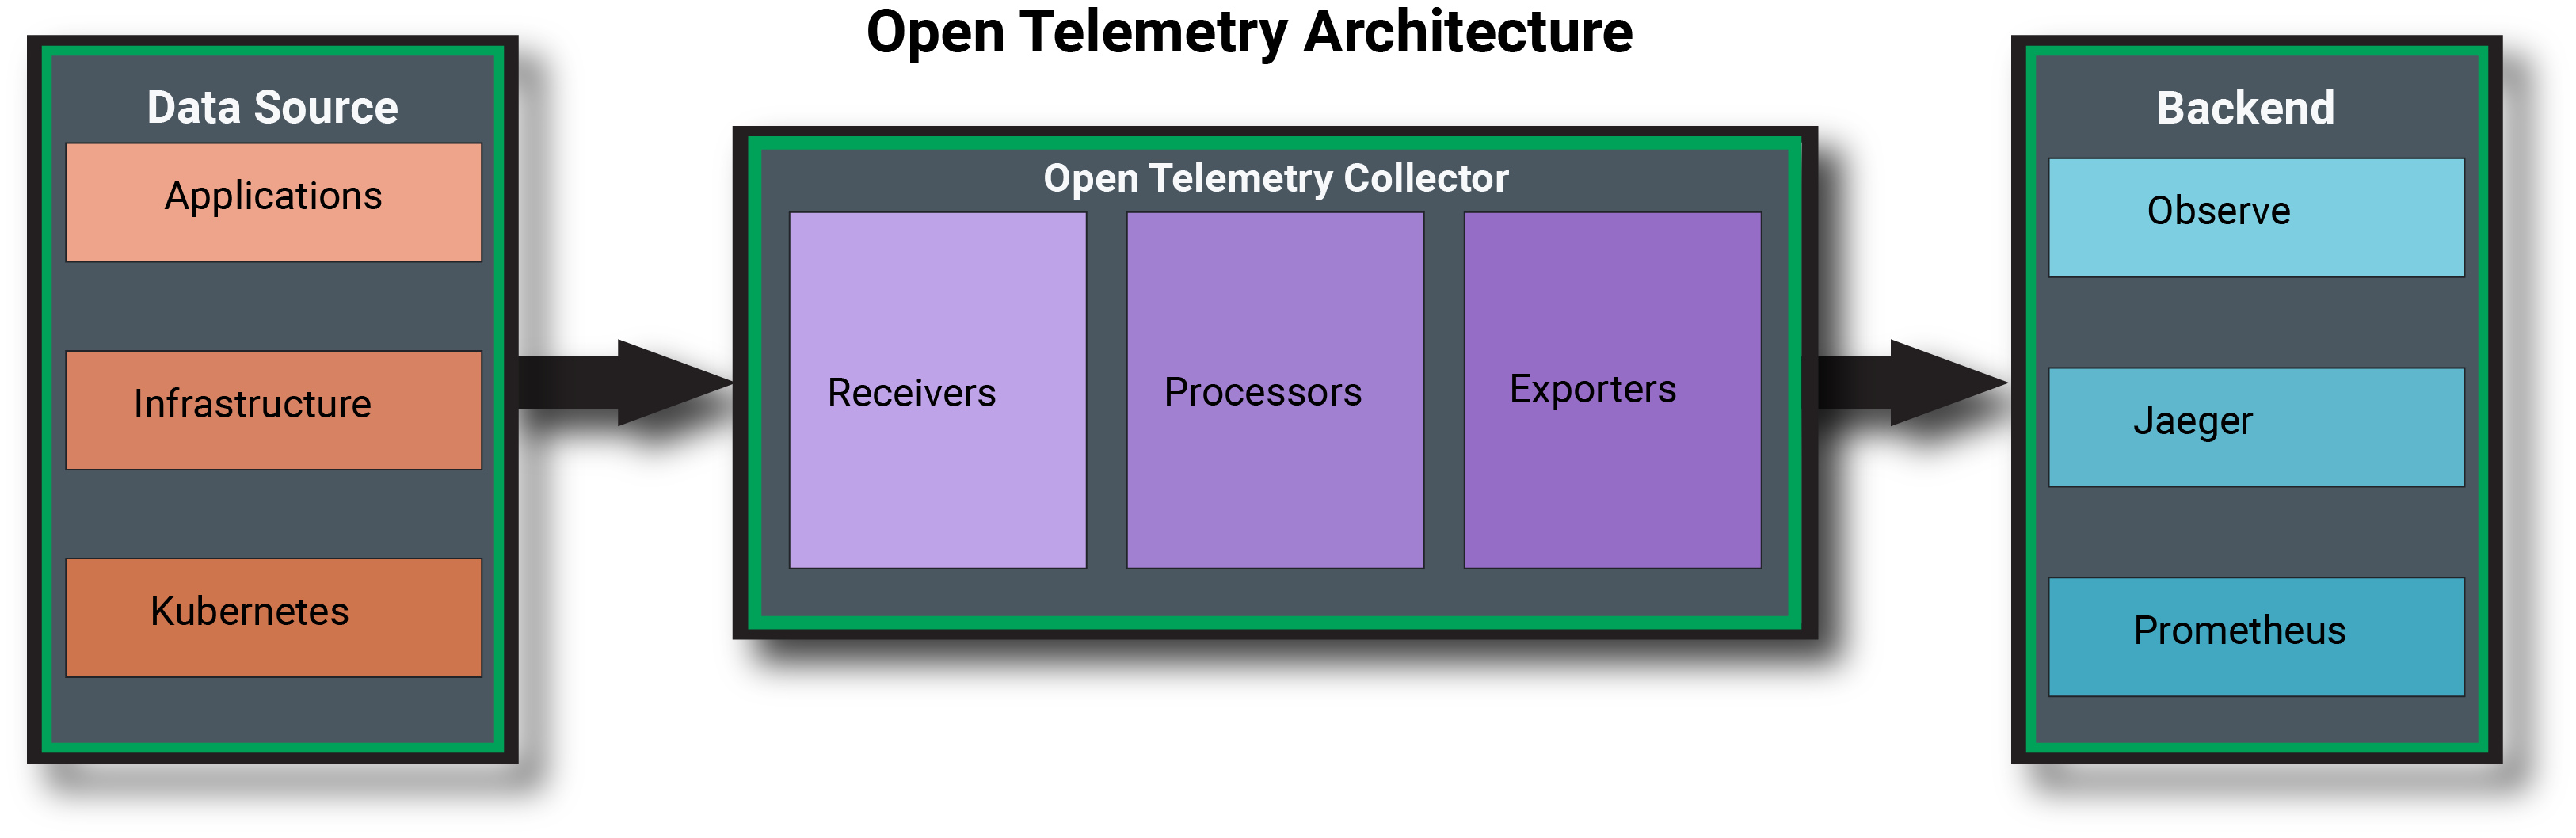 OpenTelemetry Architecture Diagram